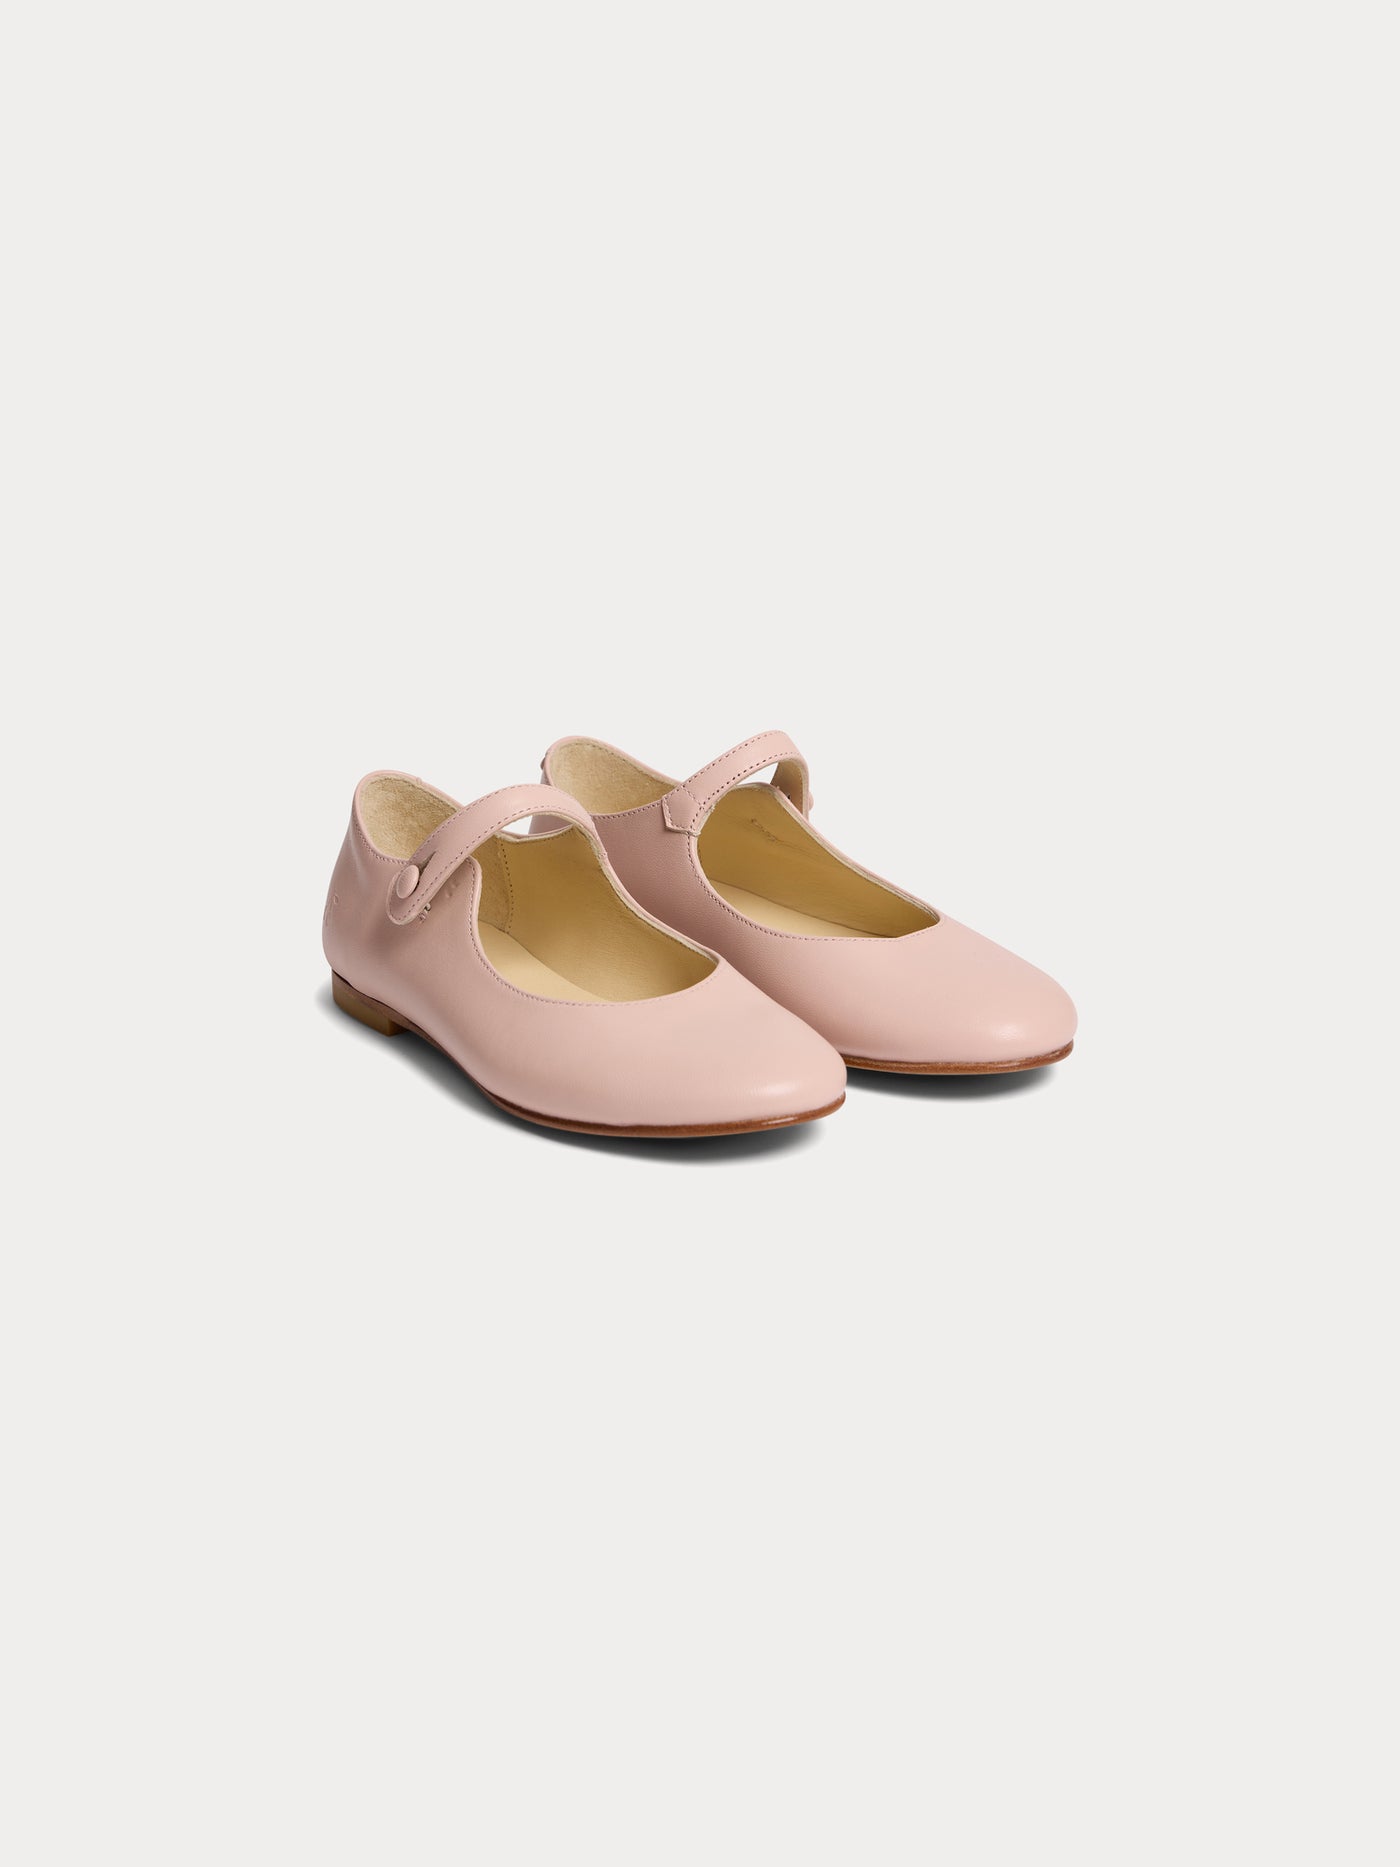 Ella Mary Janes Schuhe pink blush